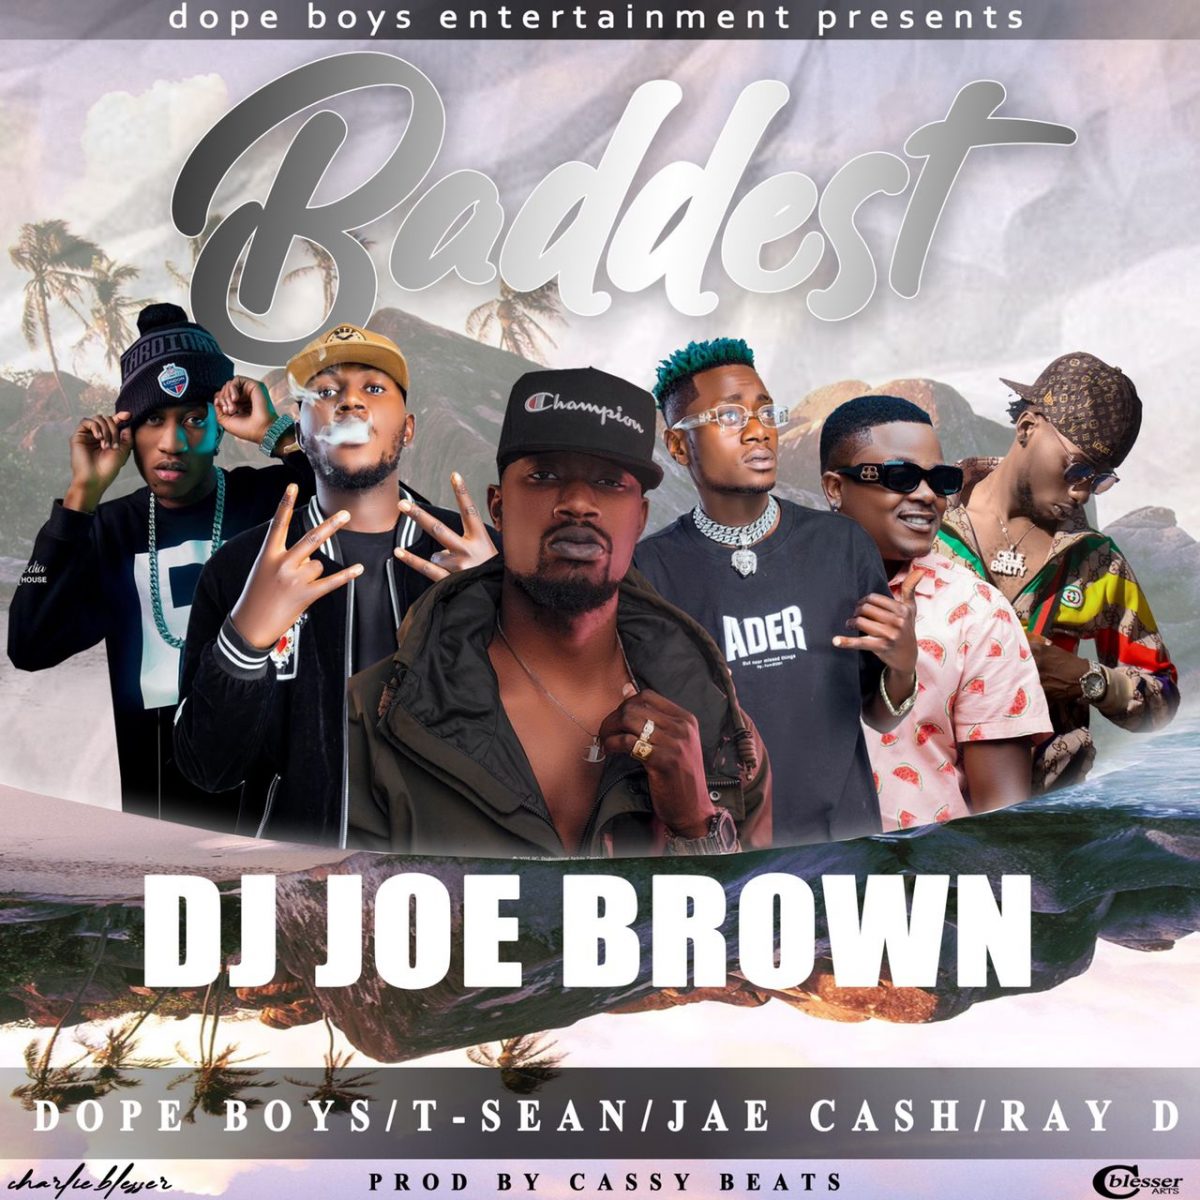 DJ Joe Brown ft. Dope Boys, T-Sean, Jae Cash & Ray Dee – Baddest